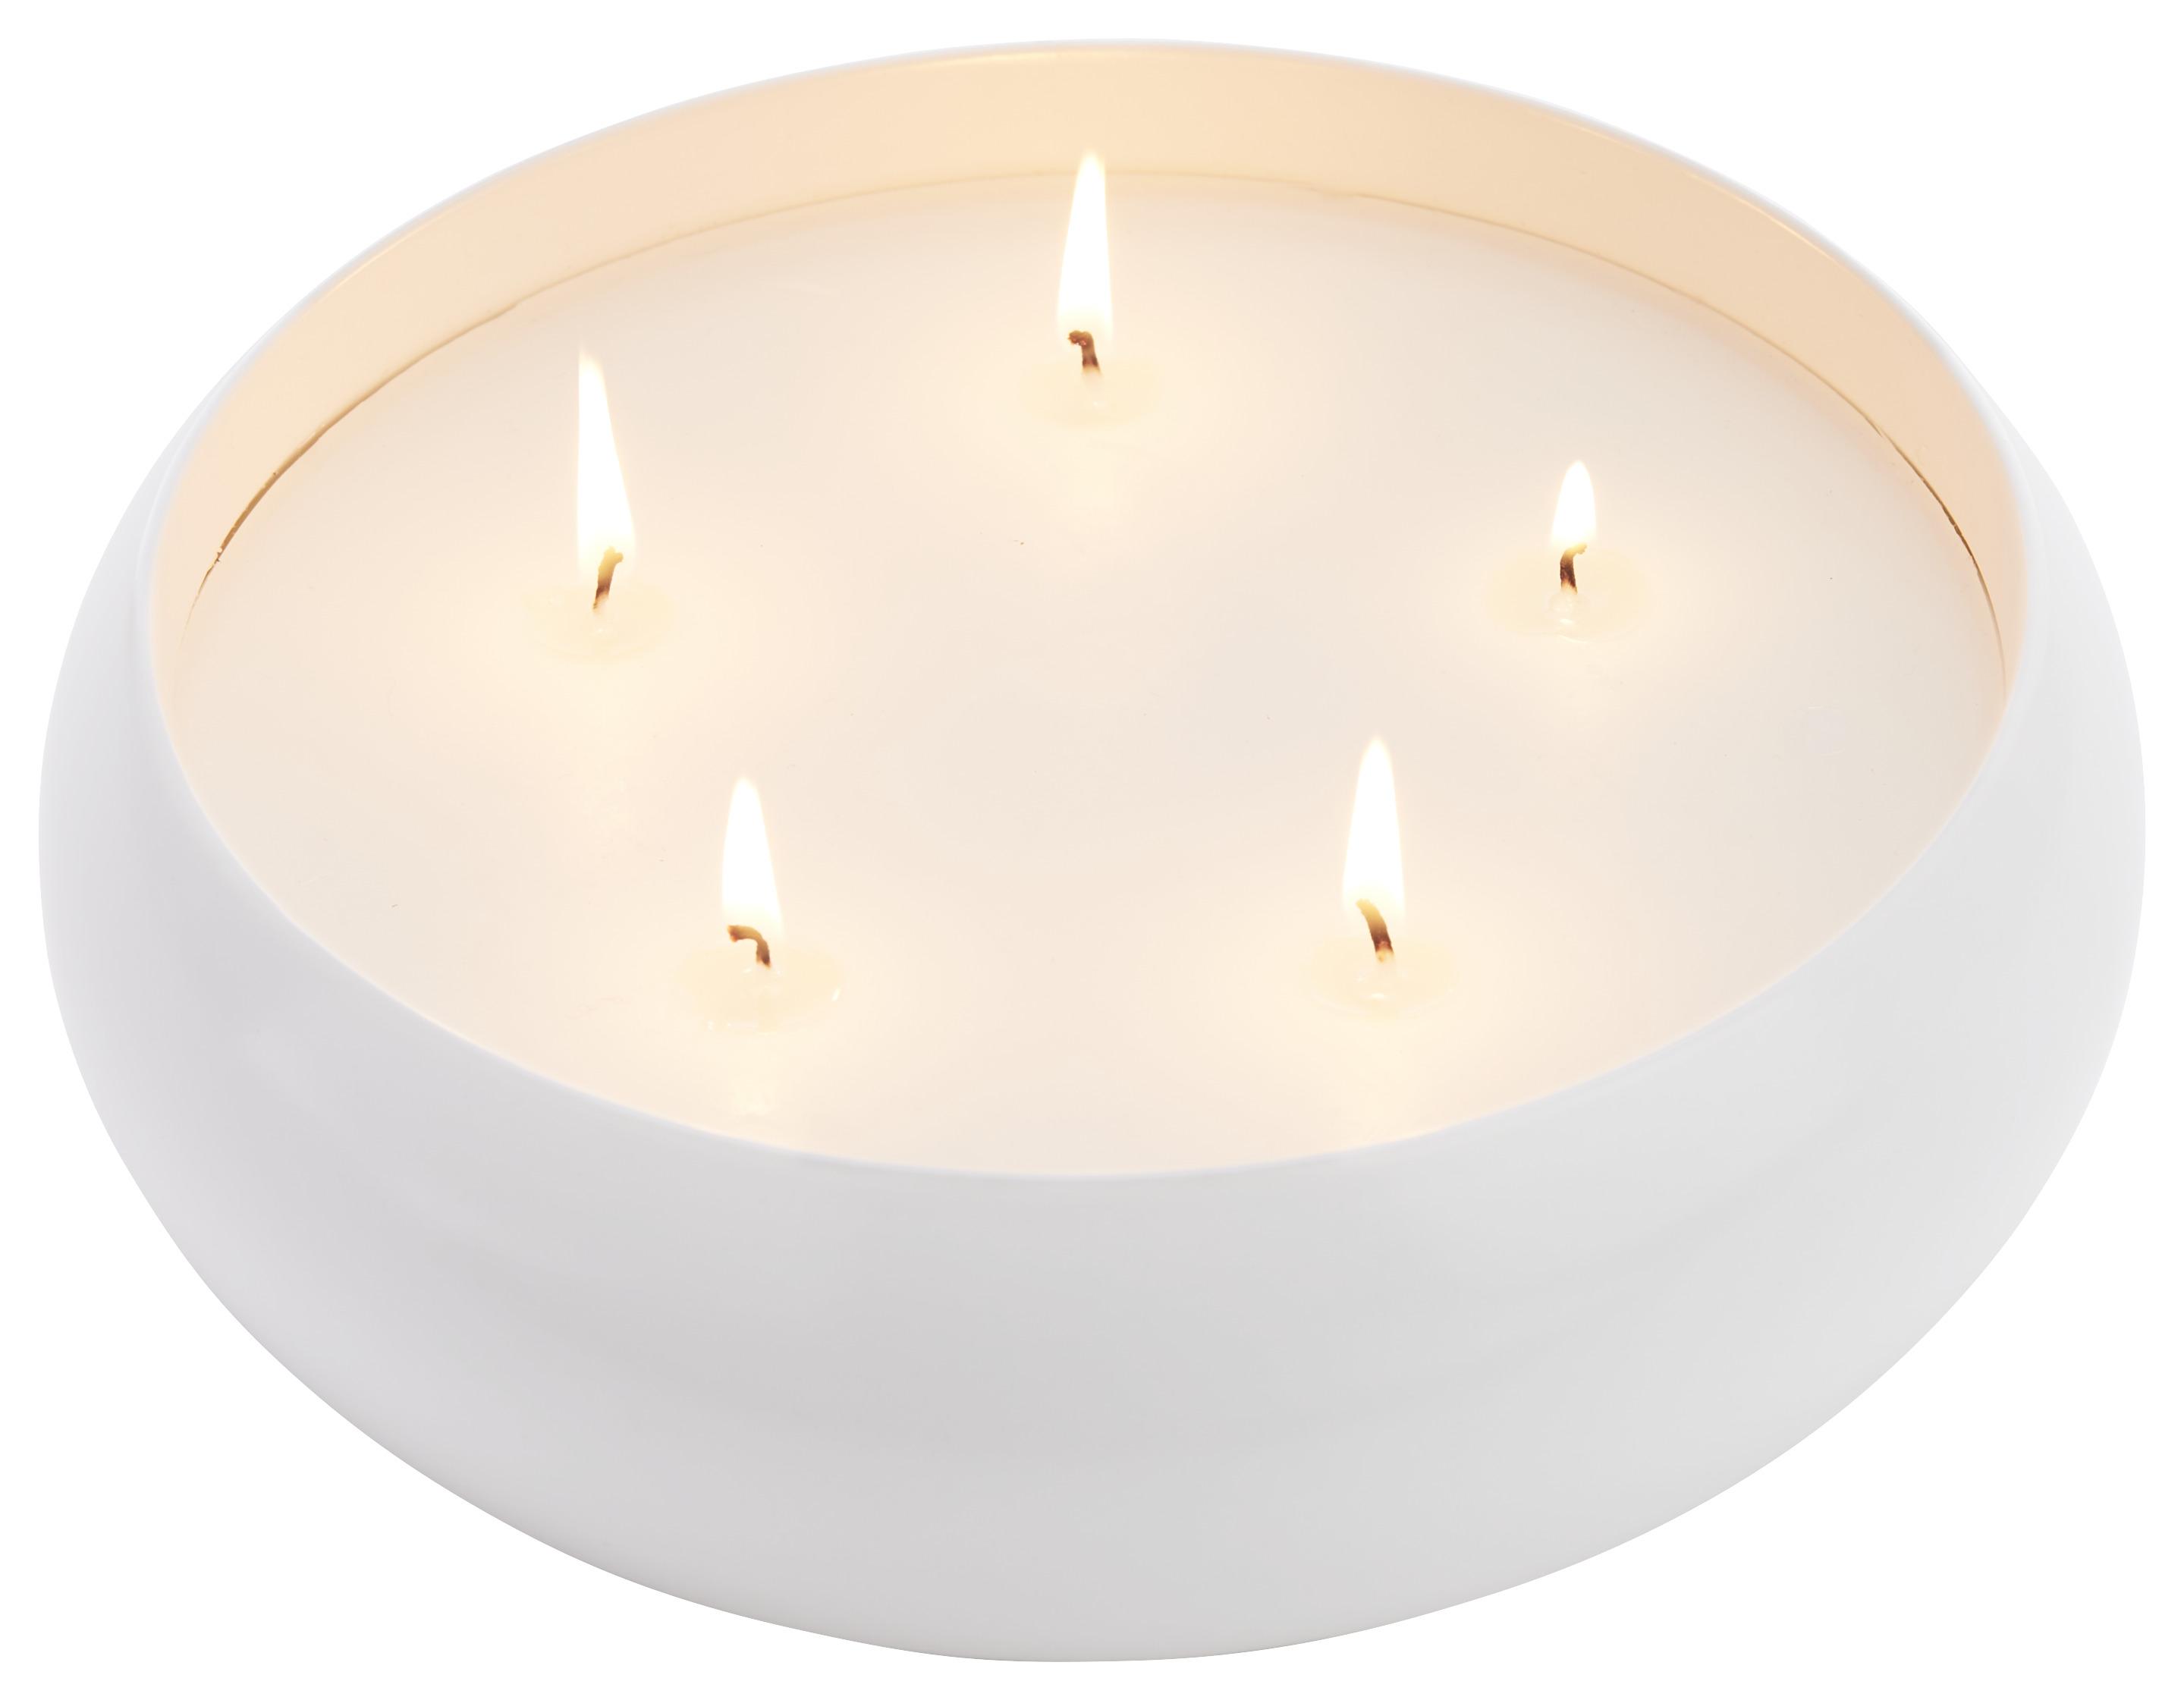 Kerze im Topf Ava in Weiß - Weiß, KONVENTIONELL, Keramik (20,1/7cm) - Premium Living